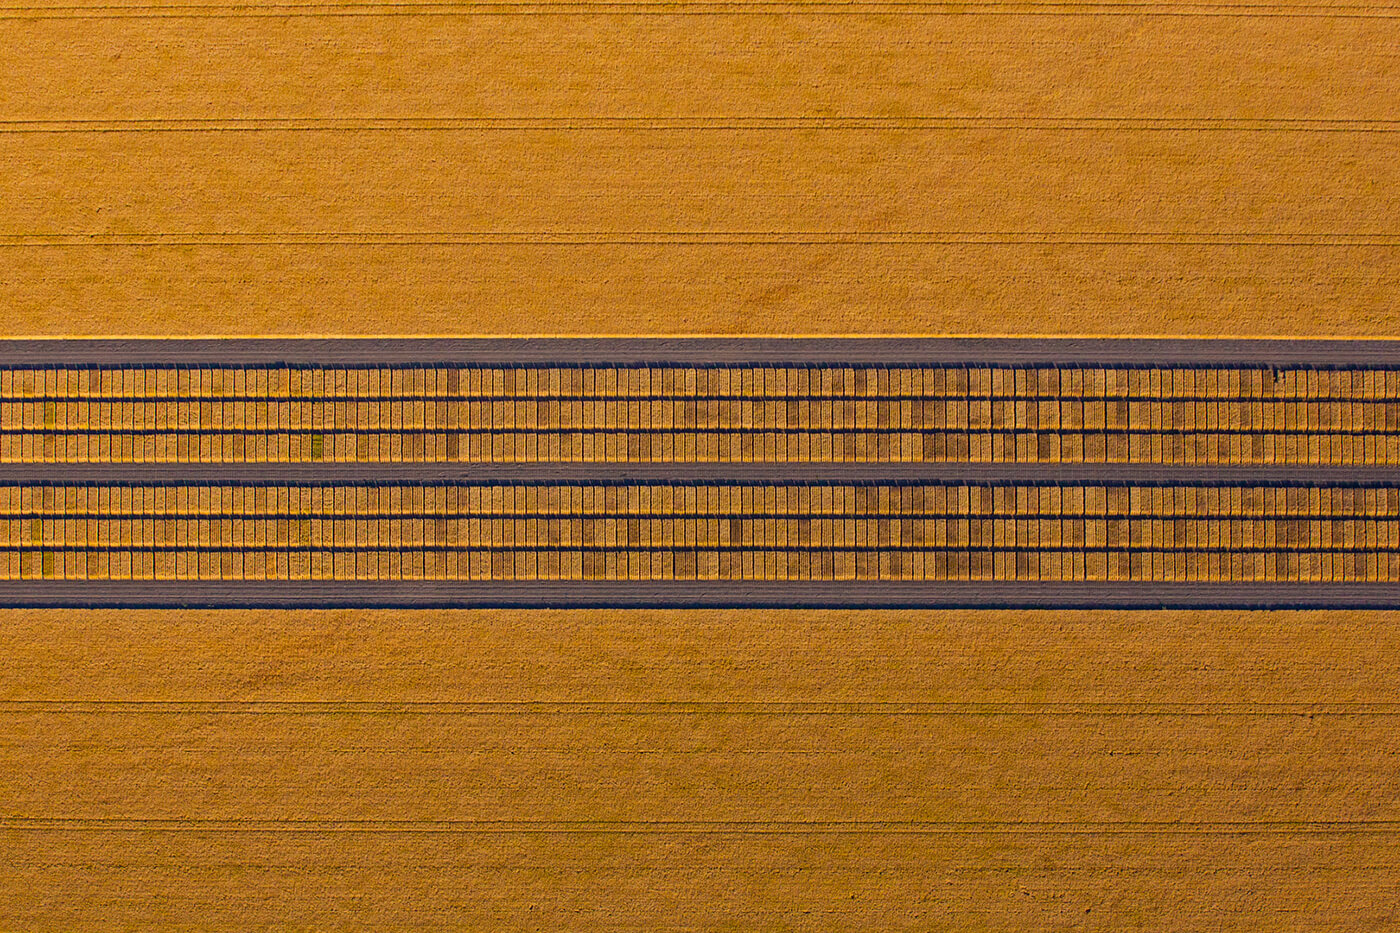 Wheat trials image by Josh Smith